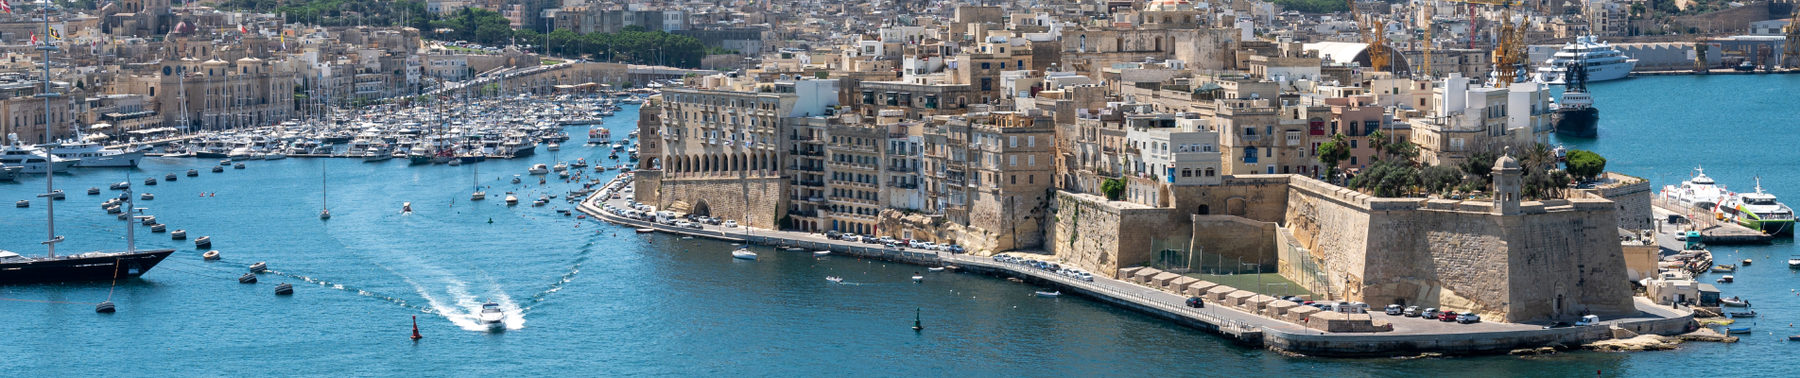 Malta, Sicily & The Aeolian Islands